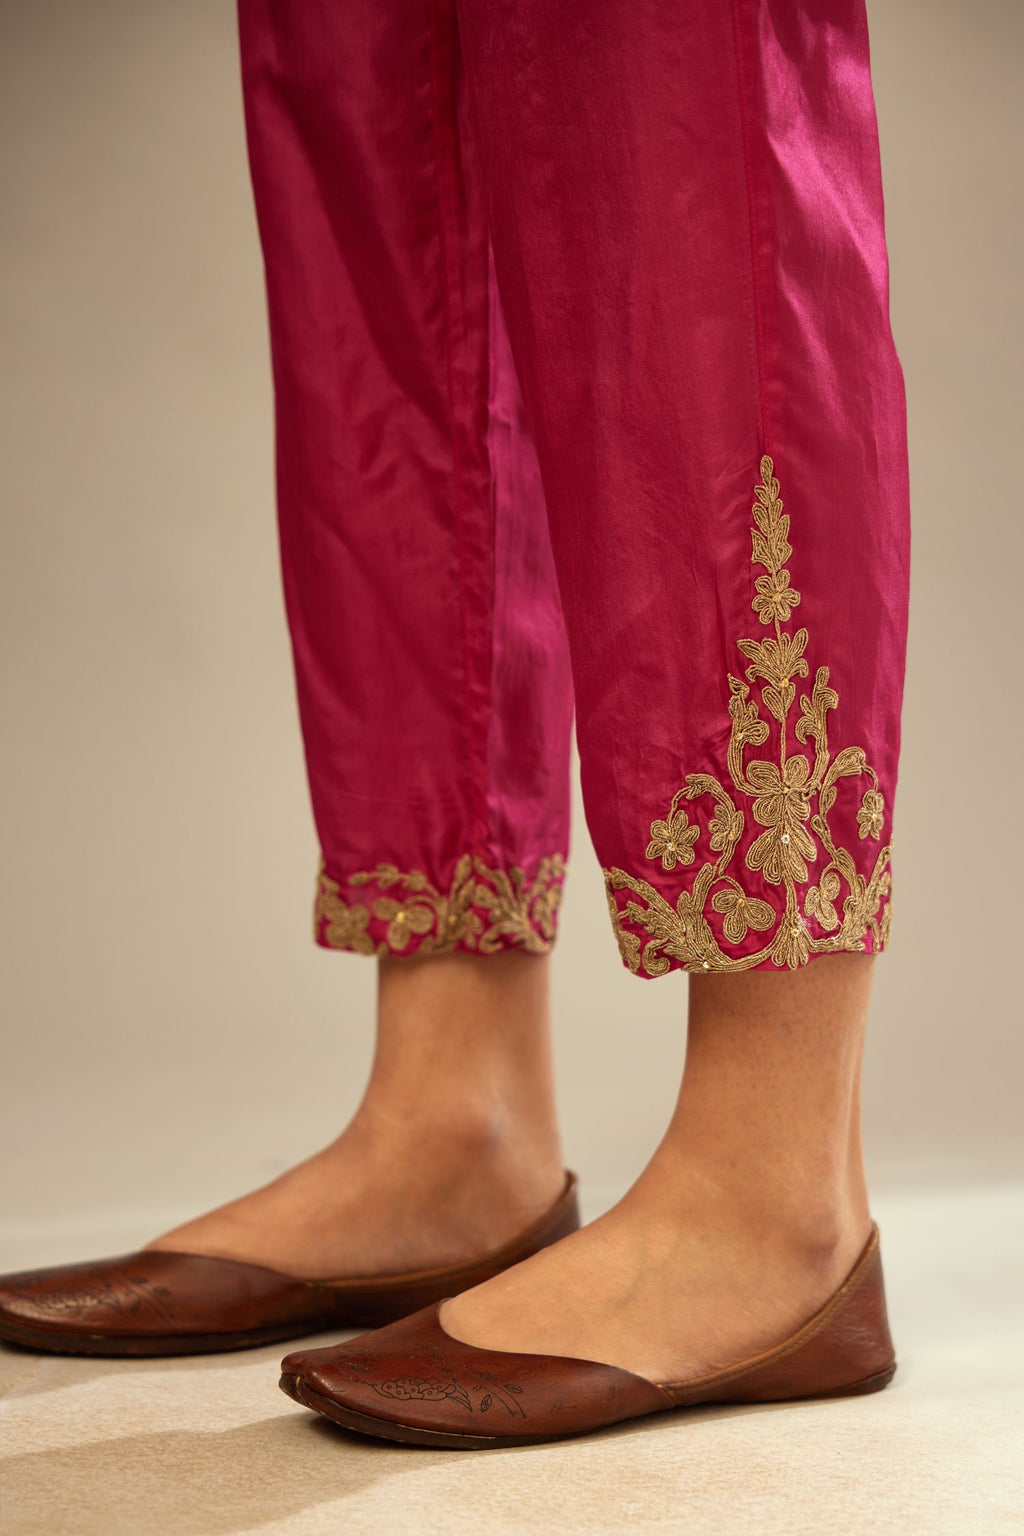 Jazzberry jam silk straight pants with dori embroidery at hem.